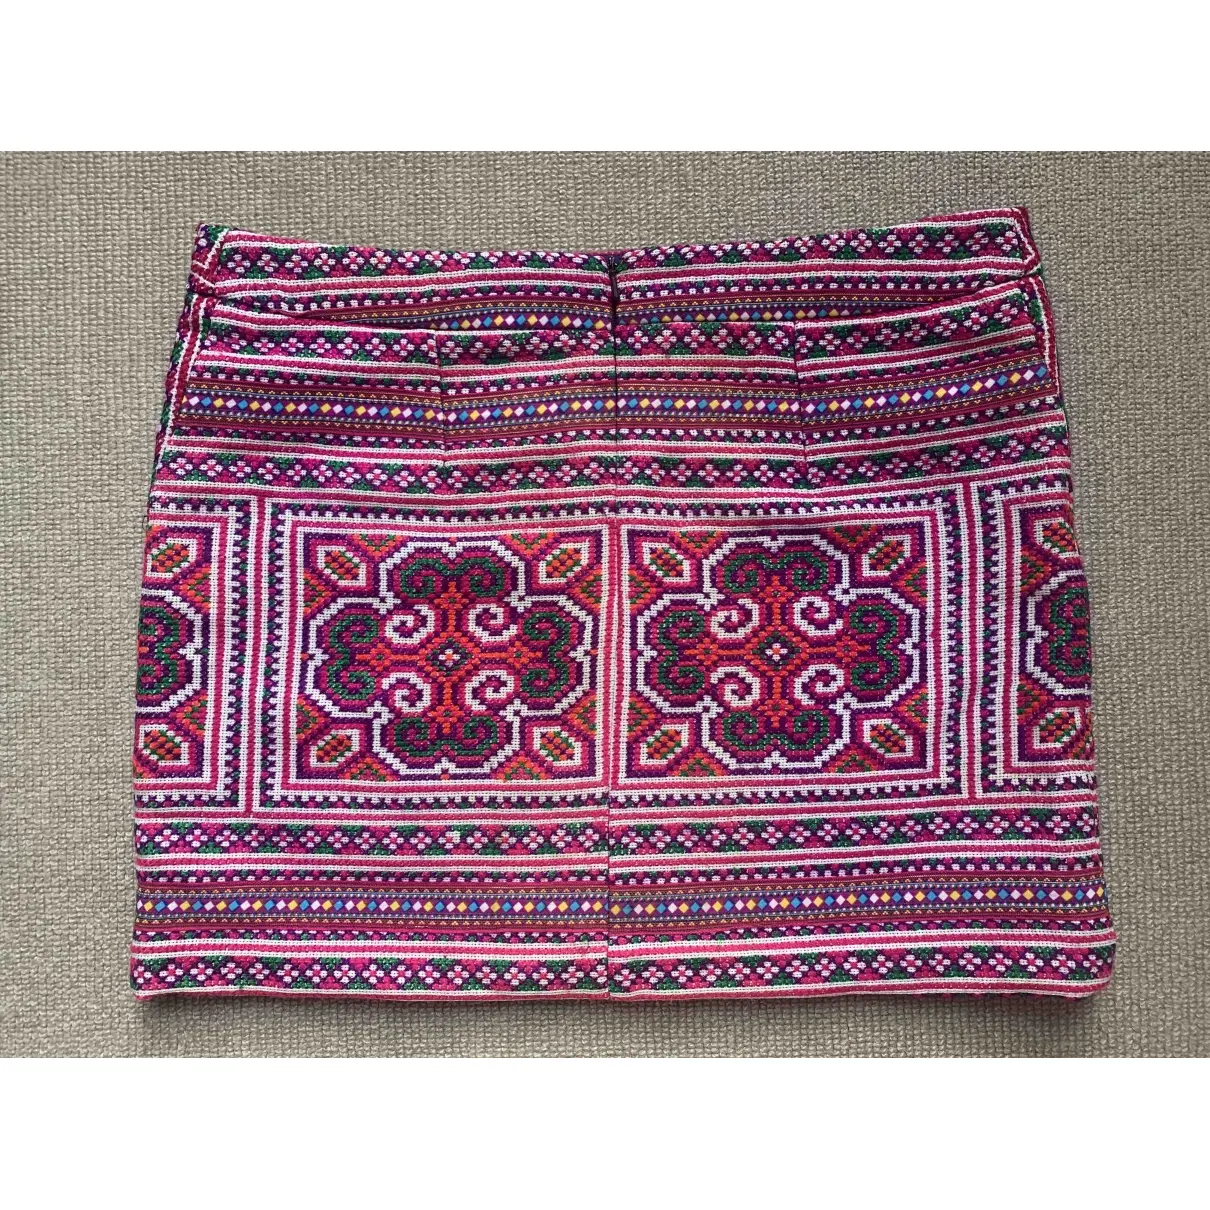 Thu Thu Mini skirt for sale